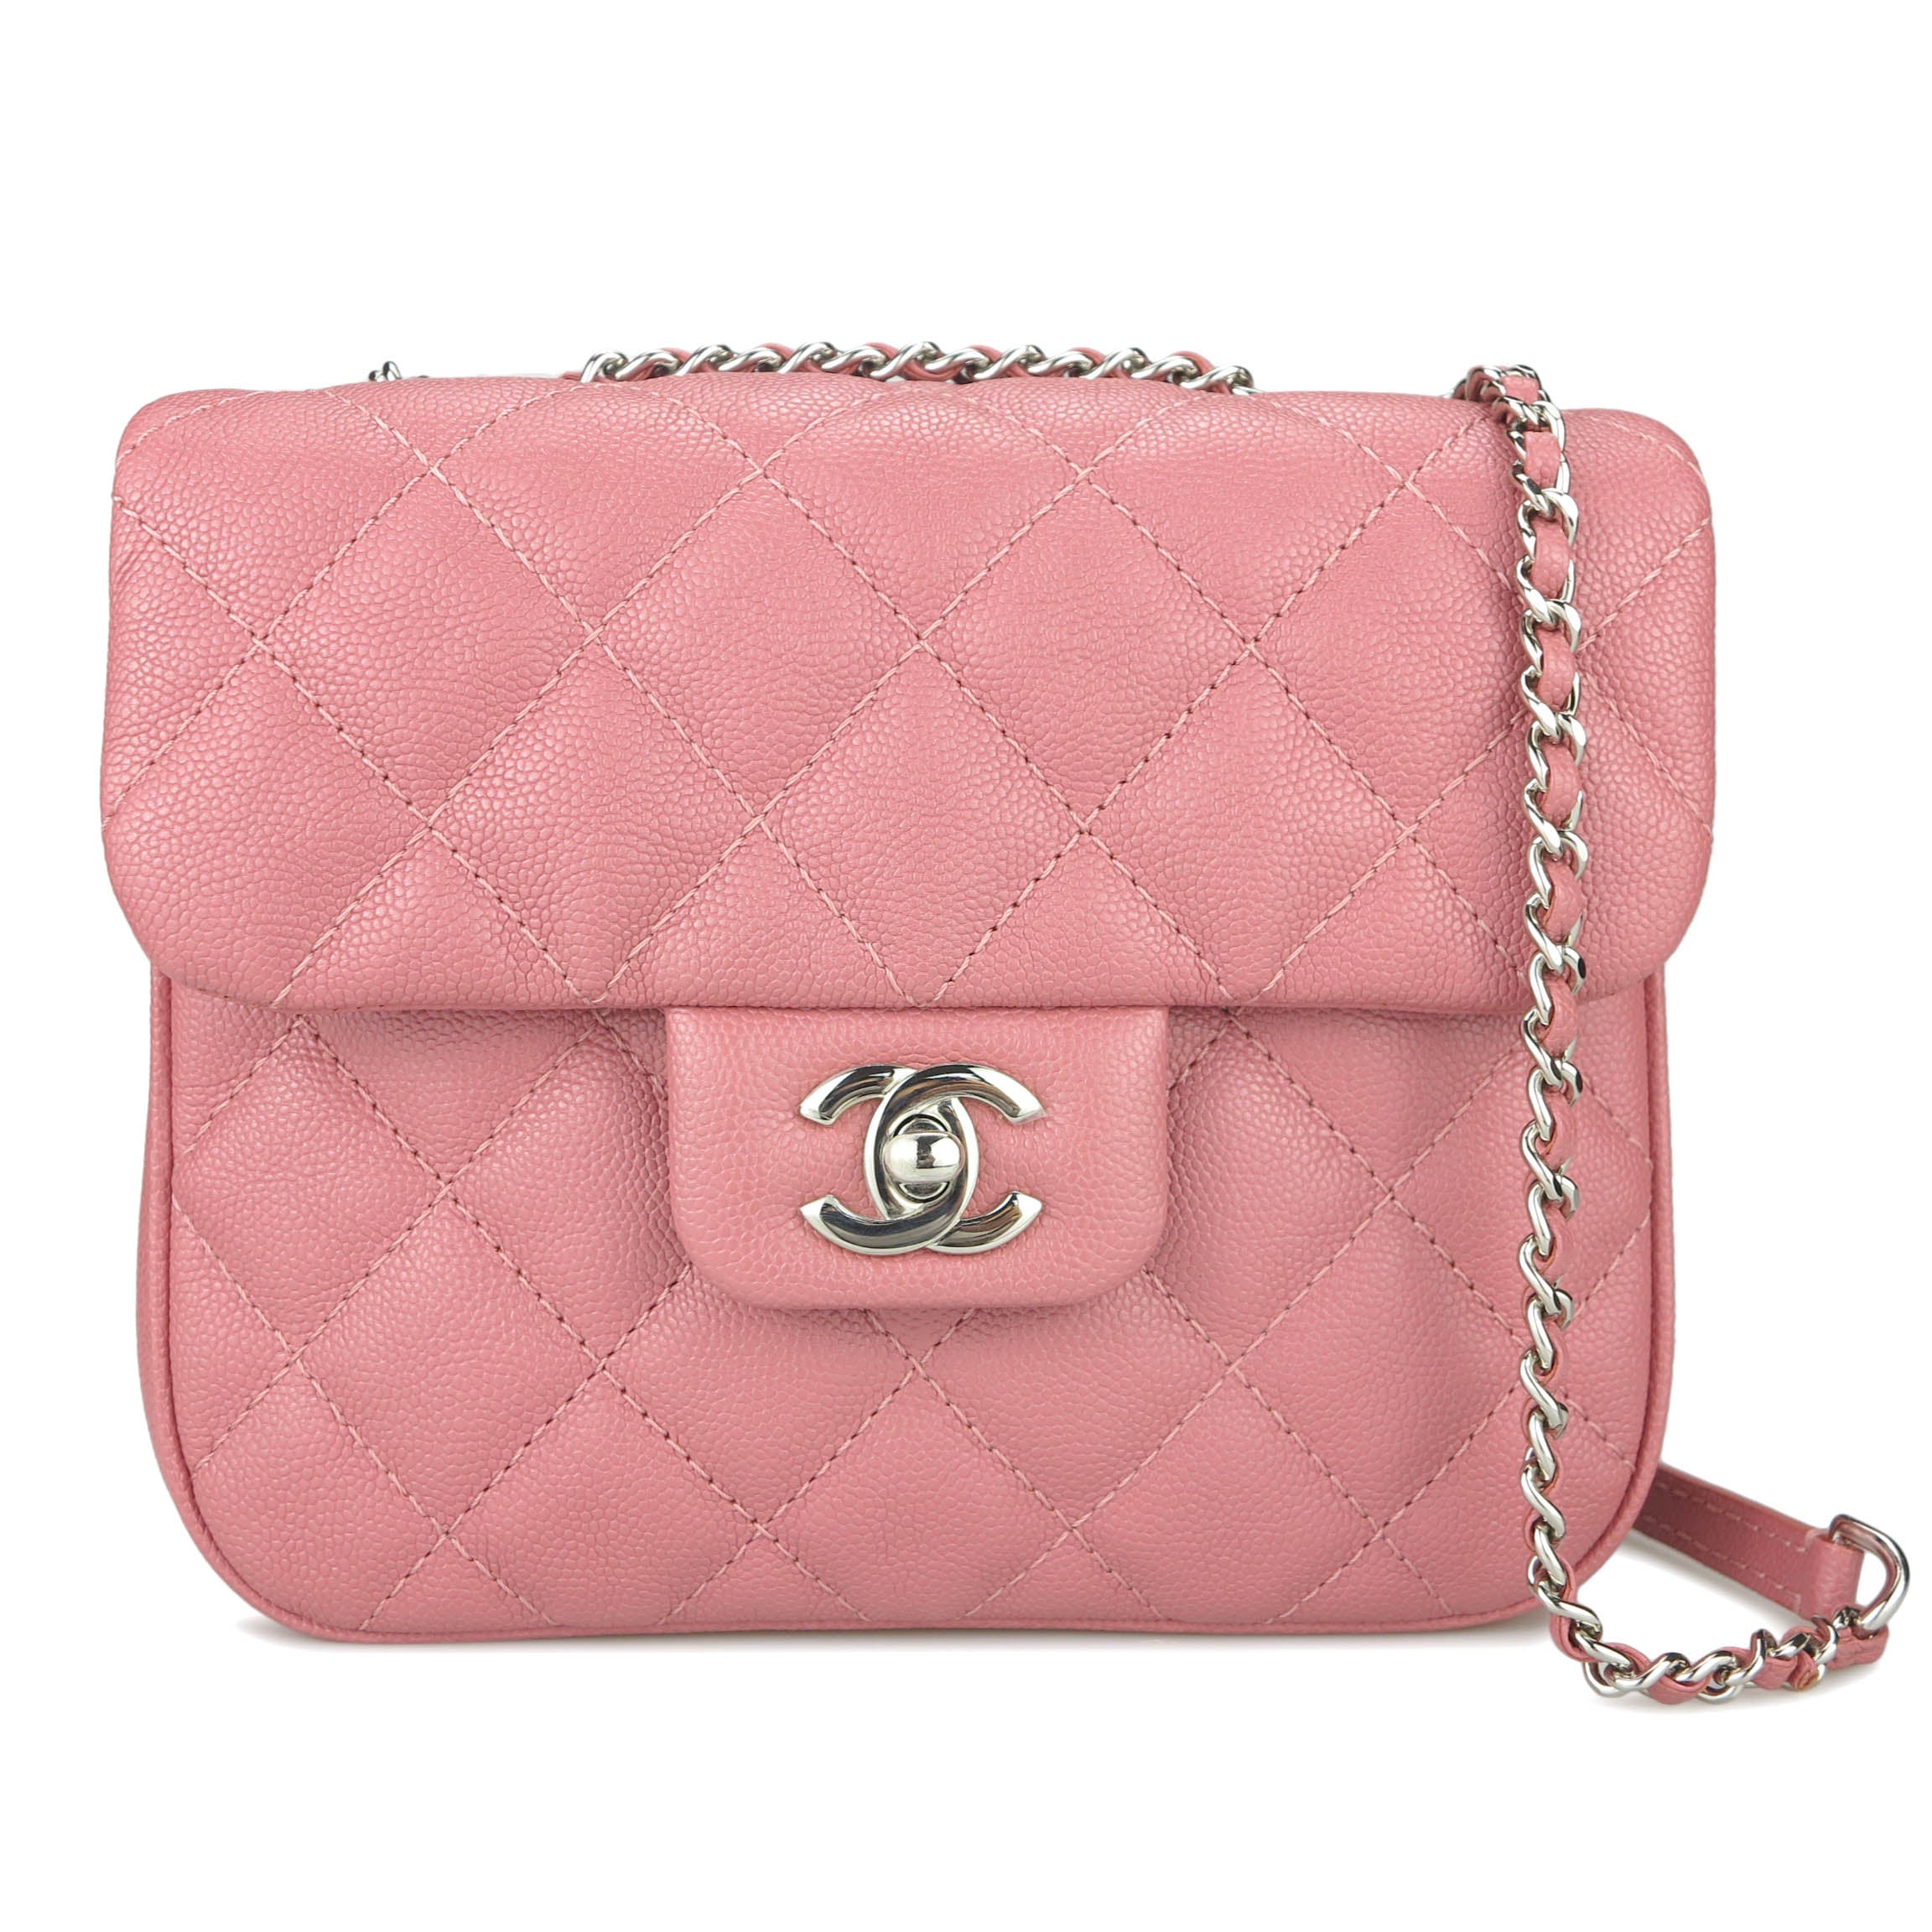 CHANEL Small Urban Companion Flap Bag in Mauve Pink Caviar